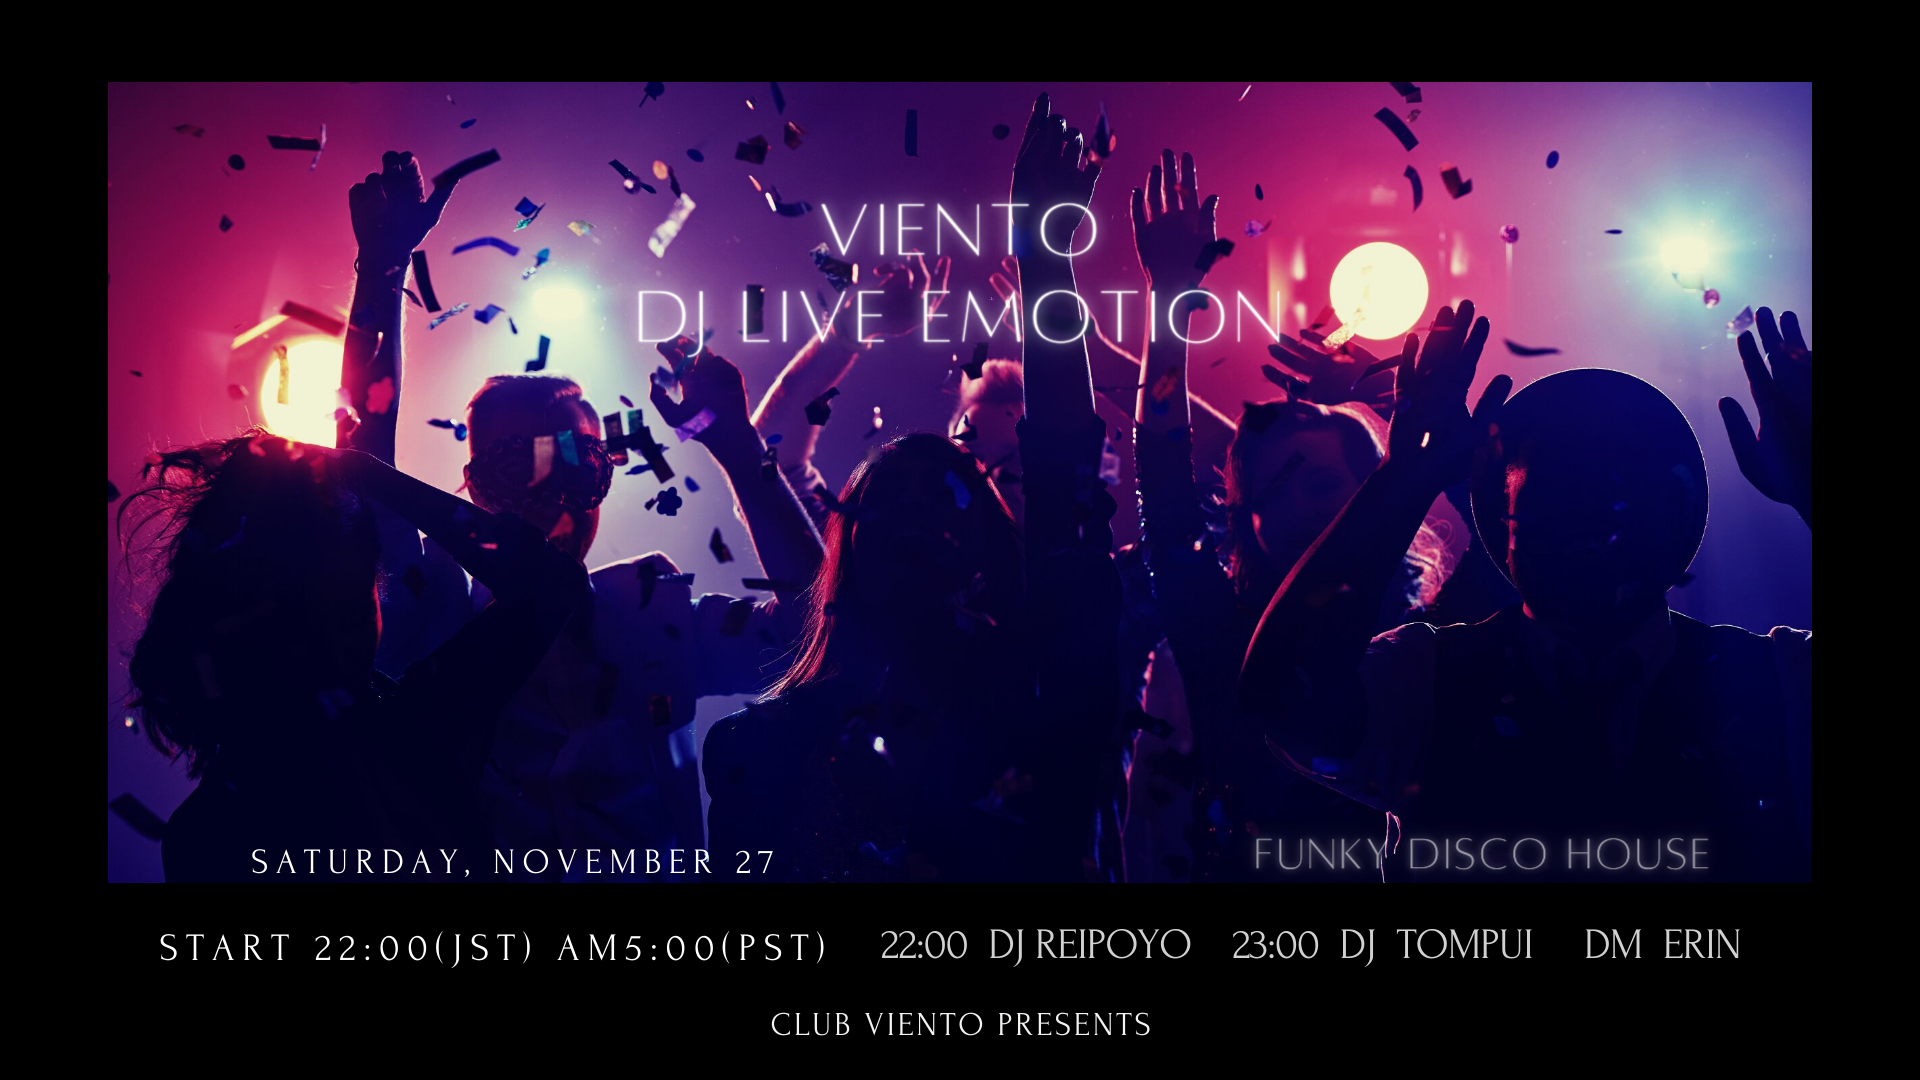 2021.11.27 Viento DJ Live Emotion! Is Over!